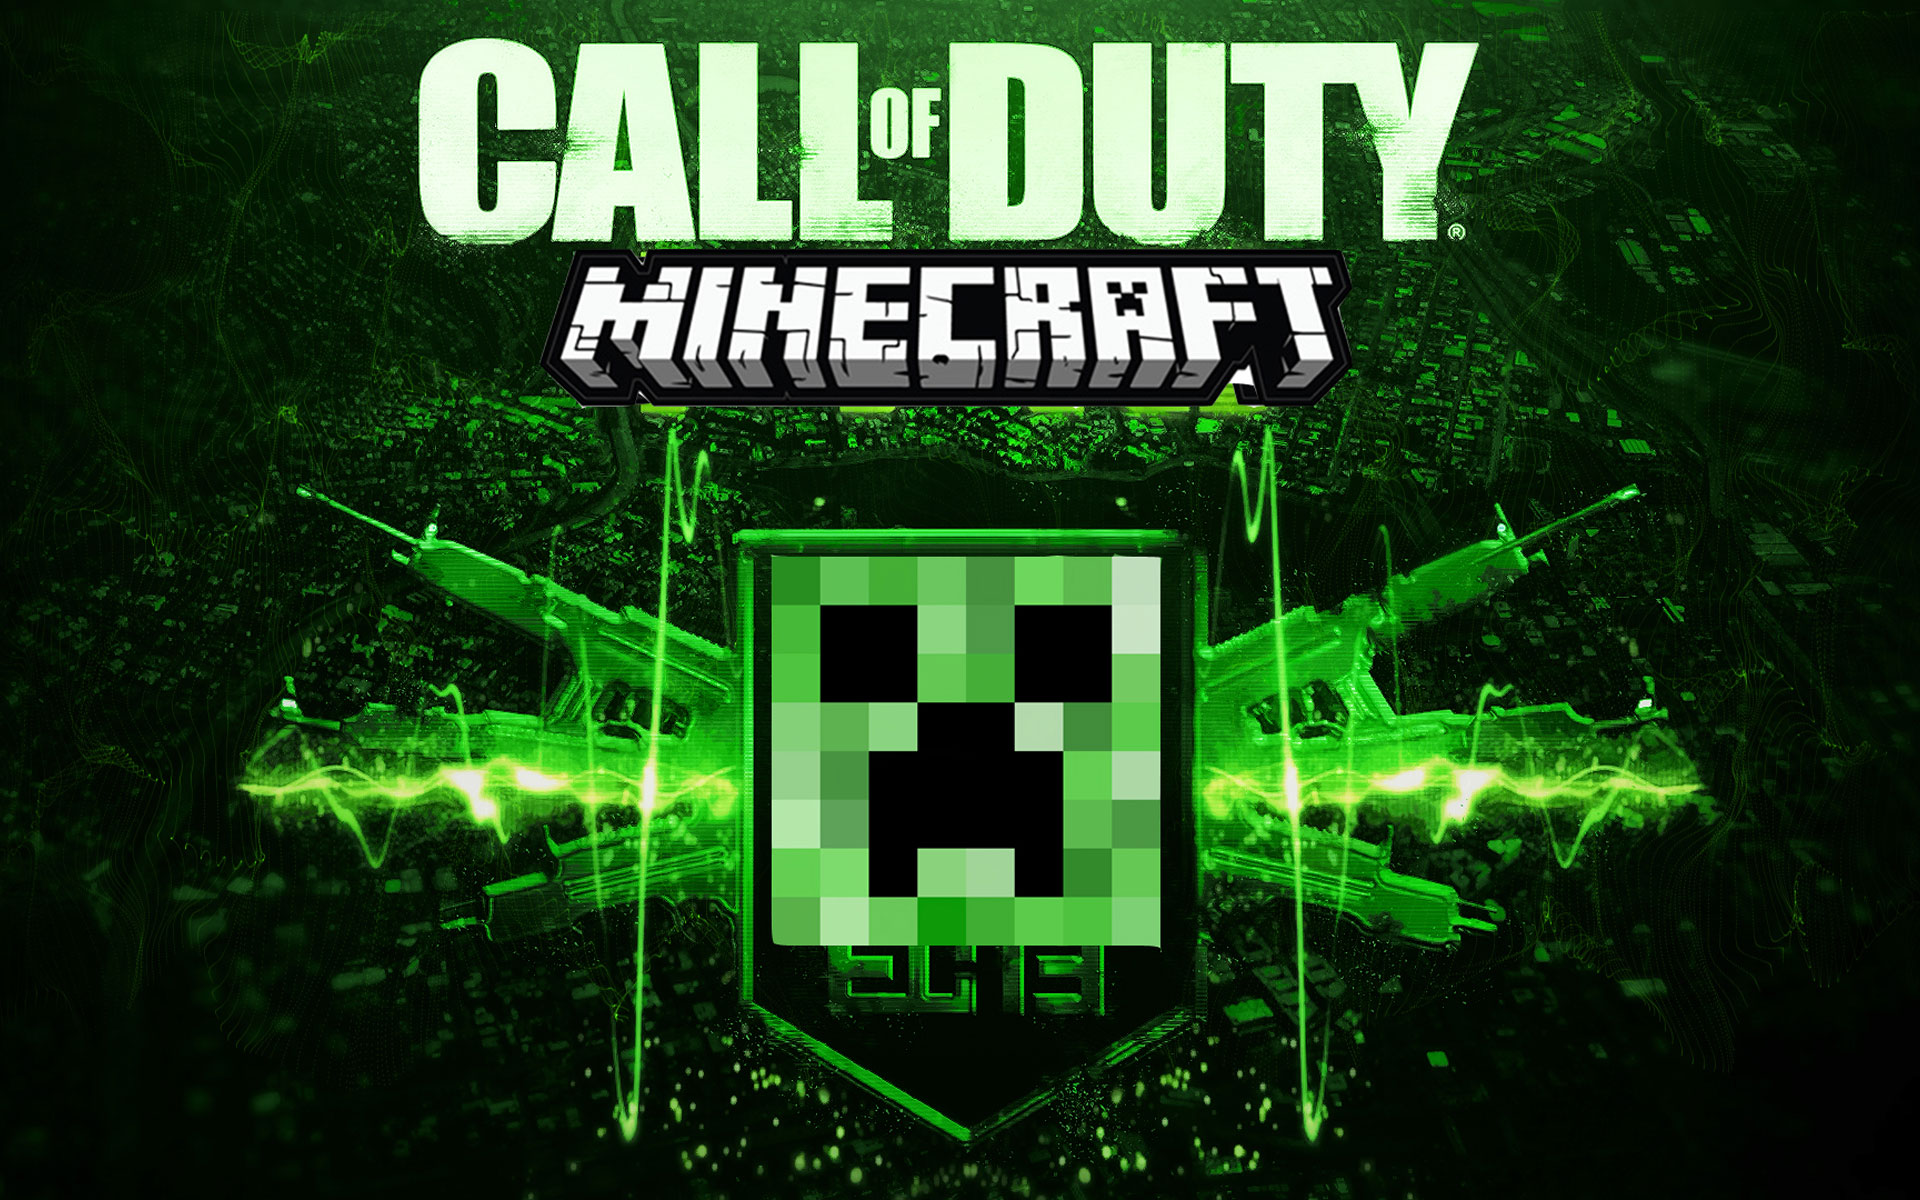 minecraft pe wallpaper,green,font,video game software,logo,graphic design